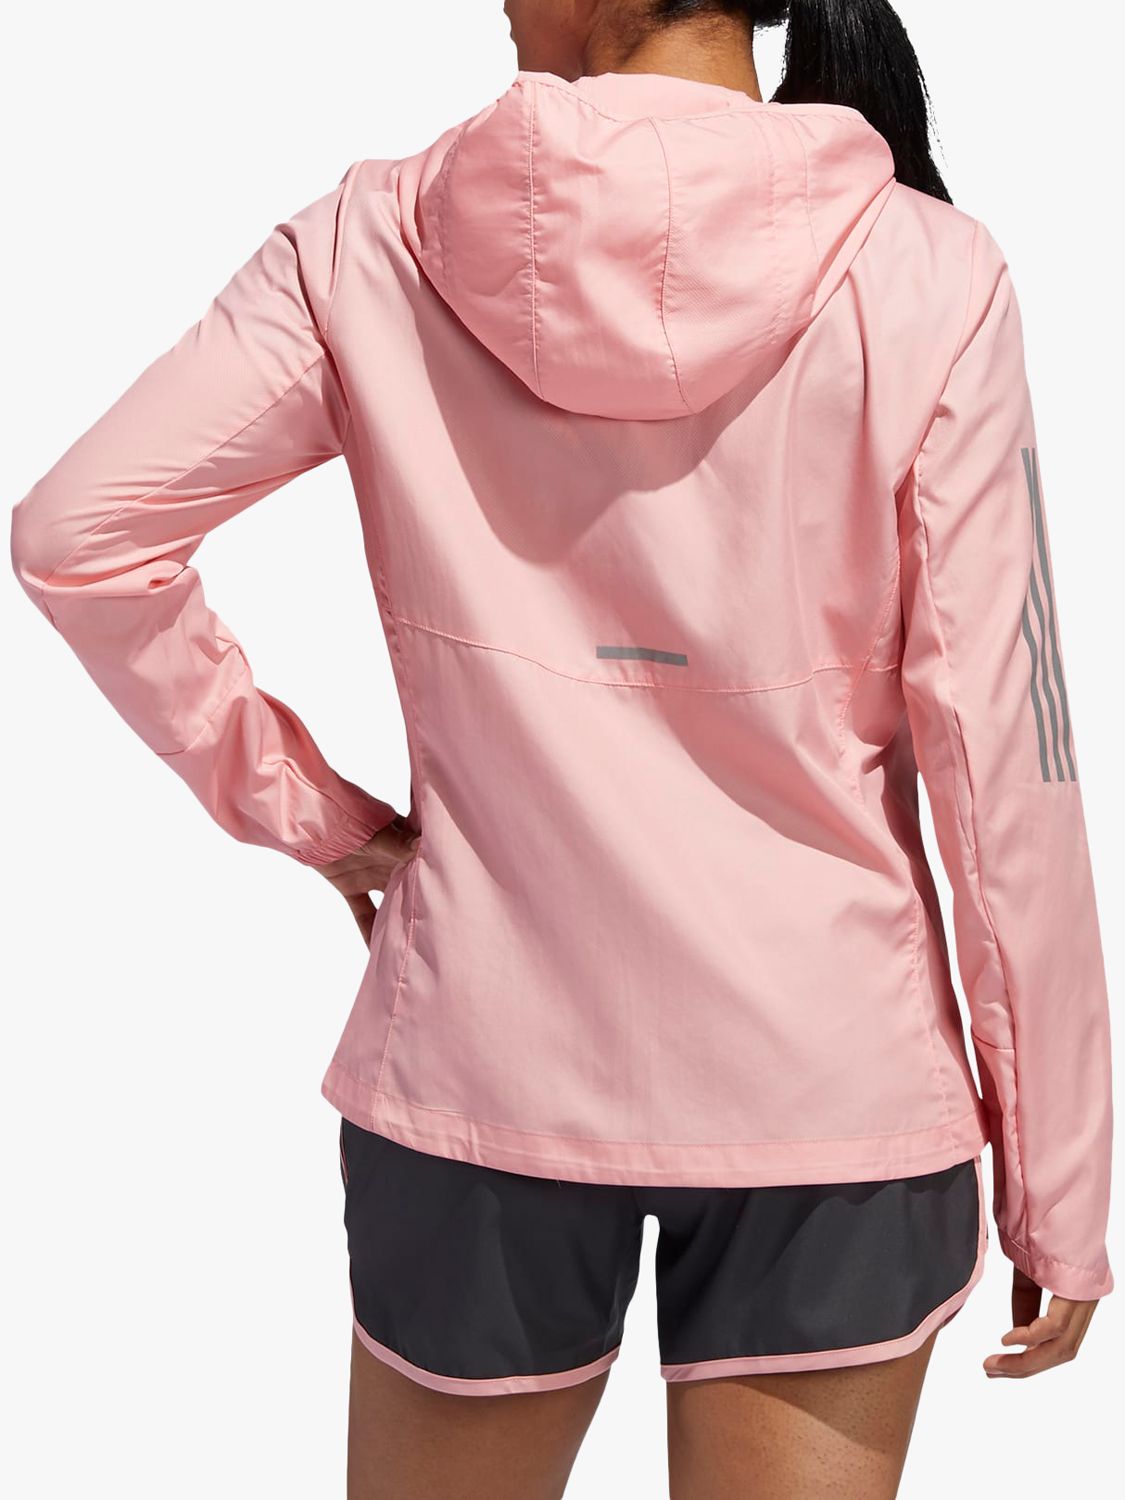 adidas women's own the run jacket